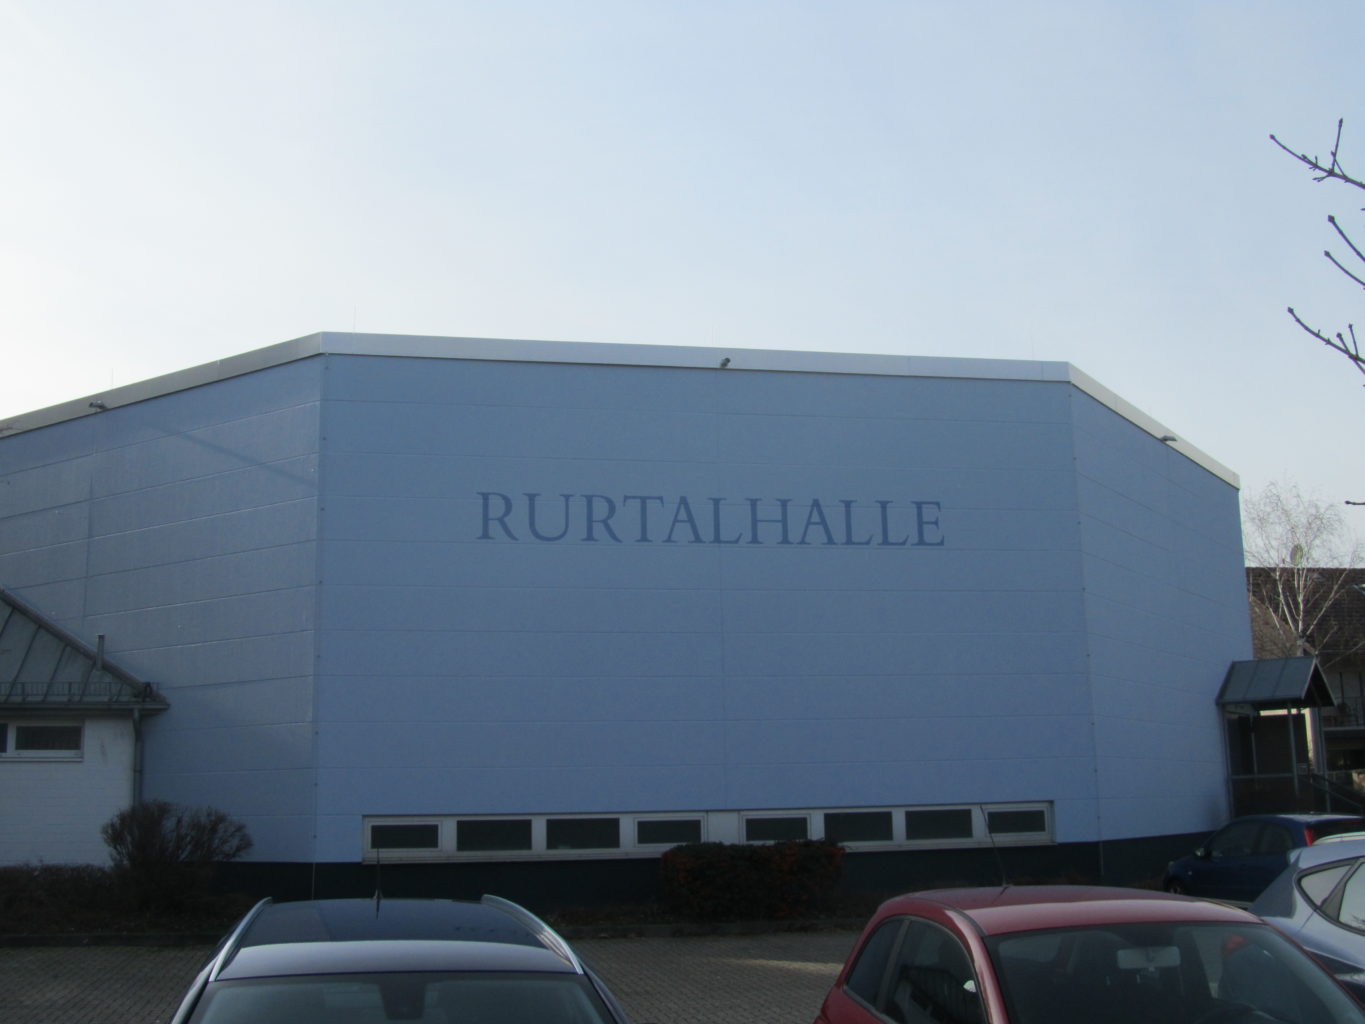 Rurtalhalle in Lendersdorf